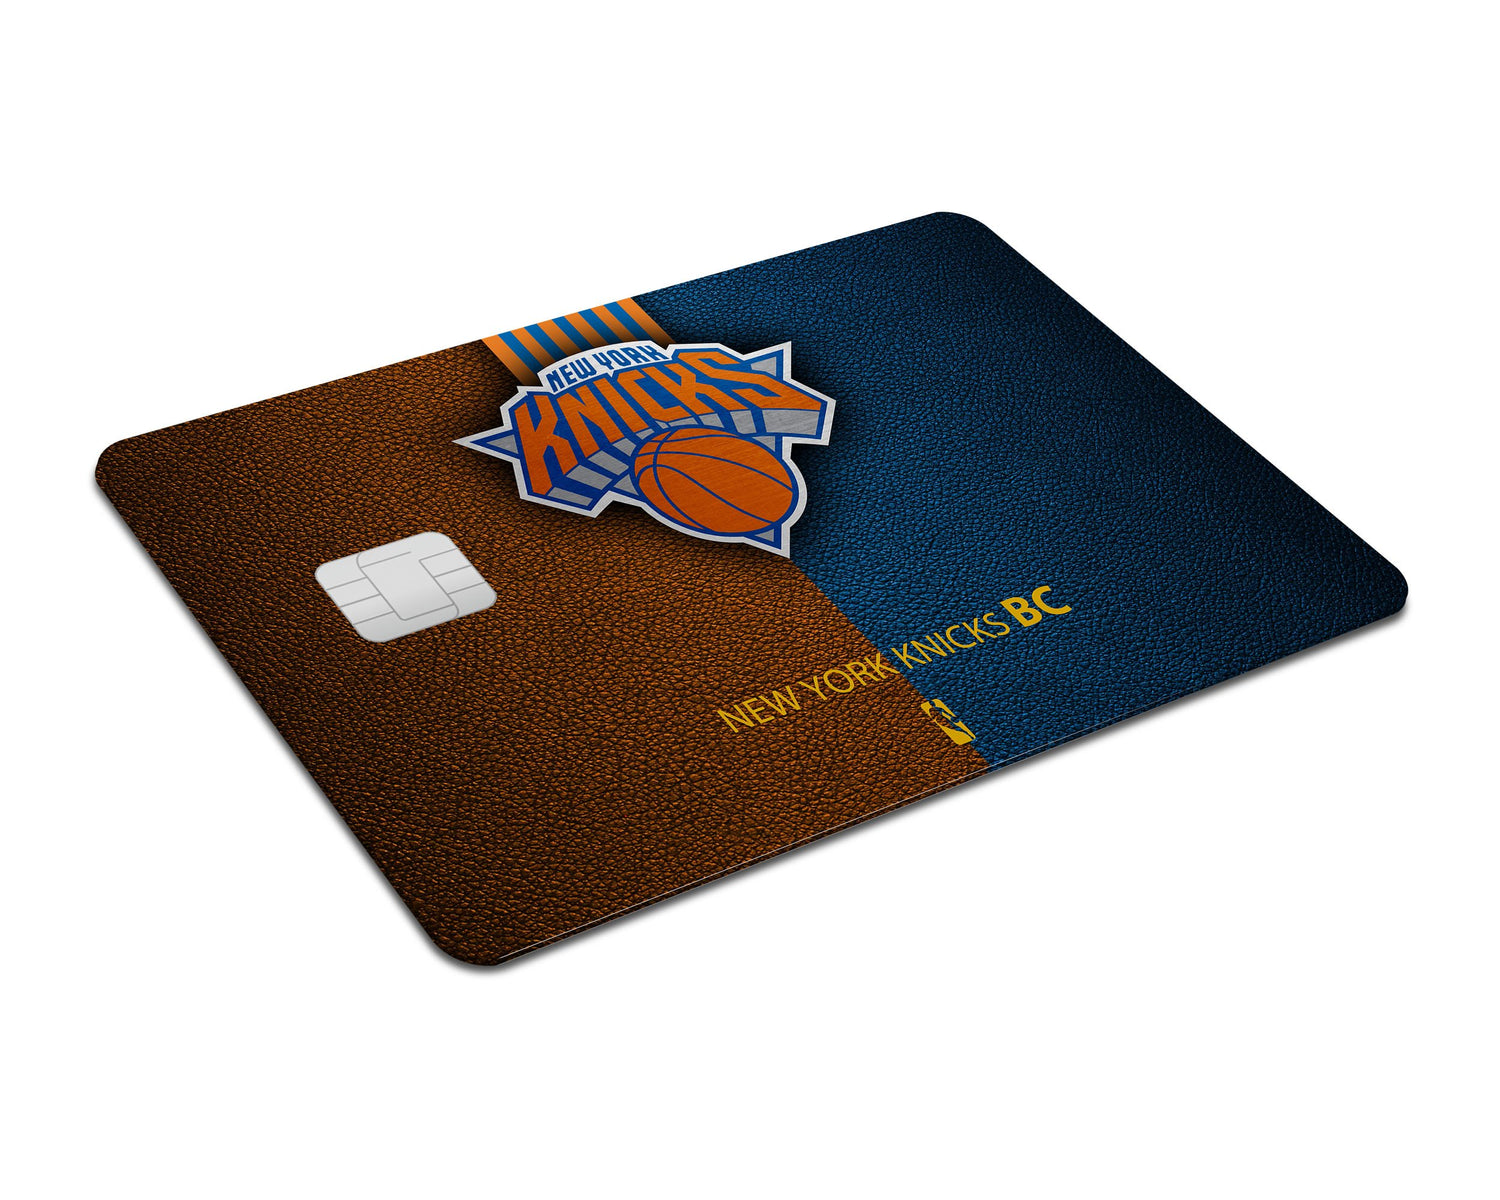 Flex Designs Credit Card New York Knicks Full Skins - Sports Basketball & Debit Card Skin